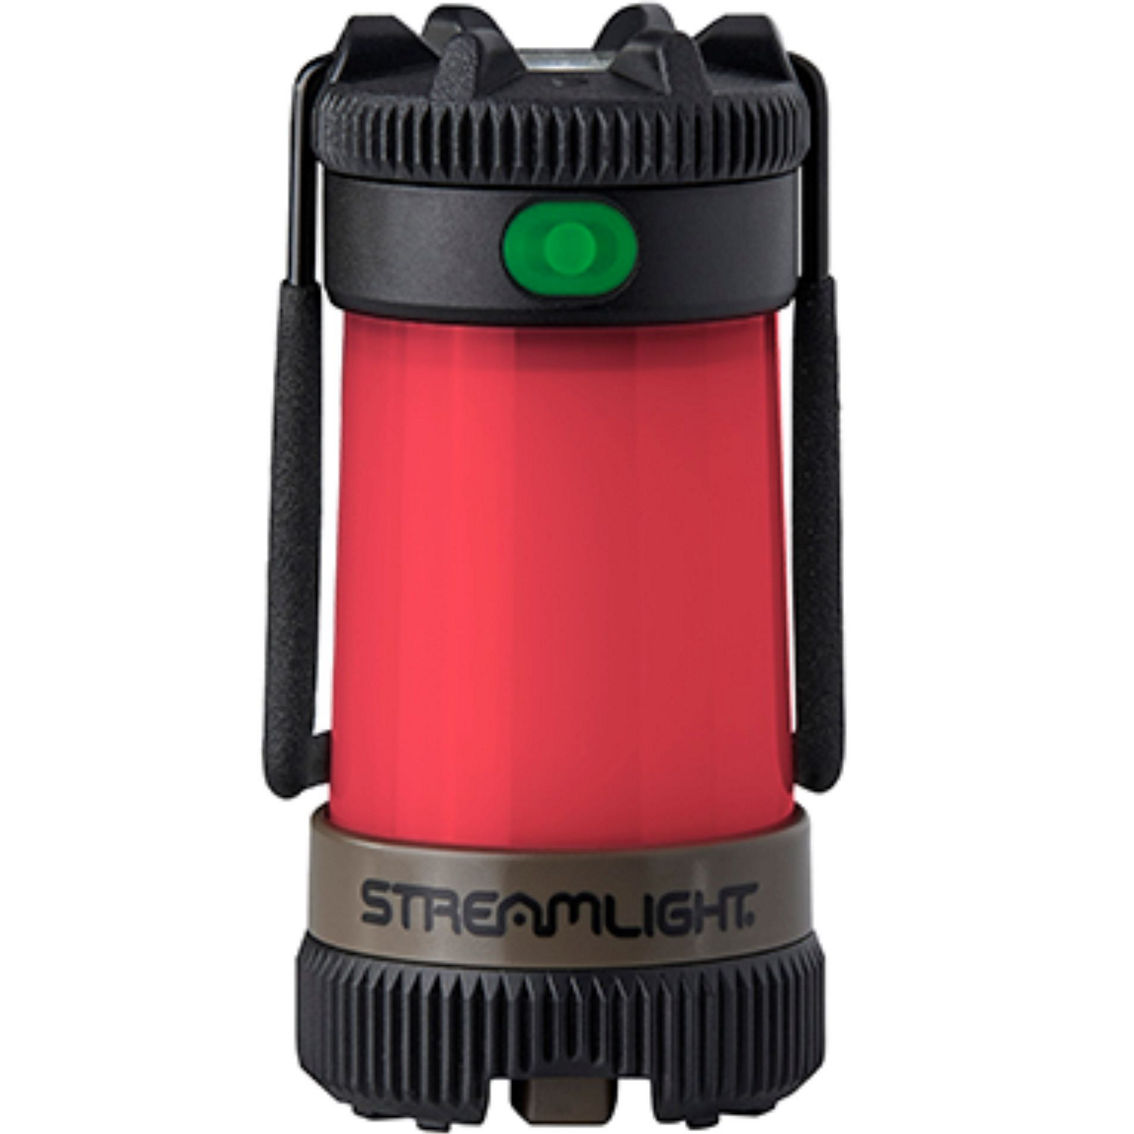 Streamlight Siege X USB, Coyote - Image 3 of 7